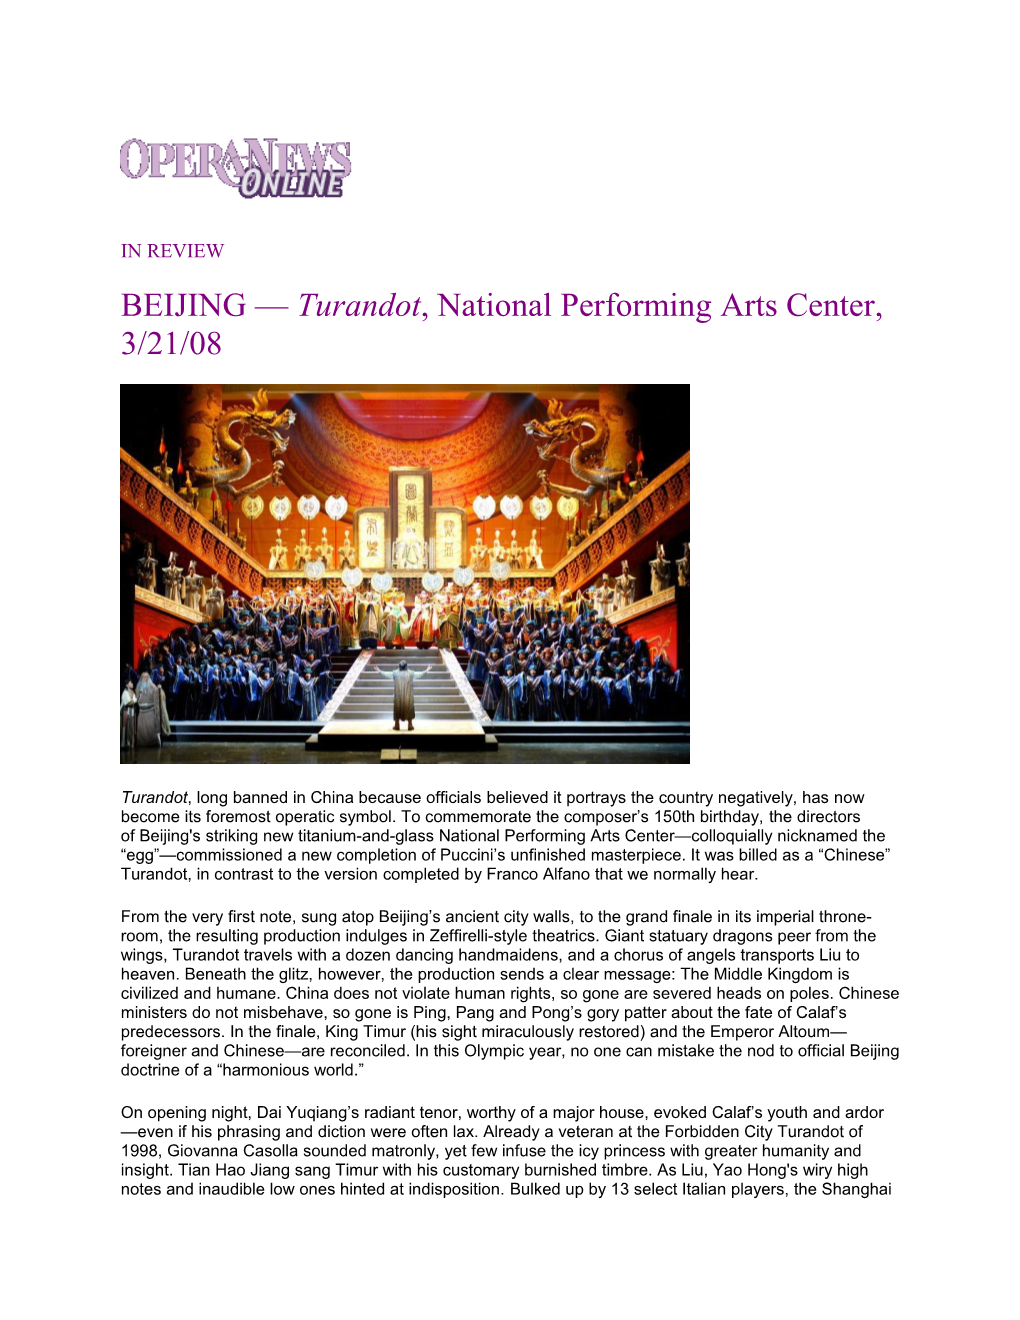 BEIJING Turandot, National Performing Arts Center, 3/21/08